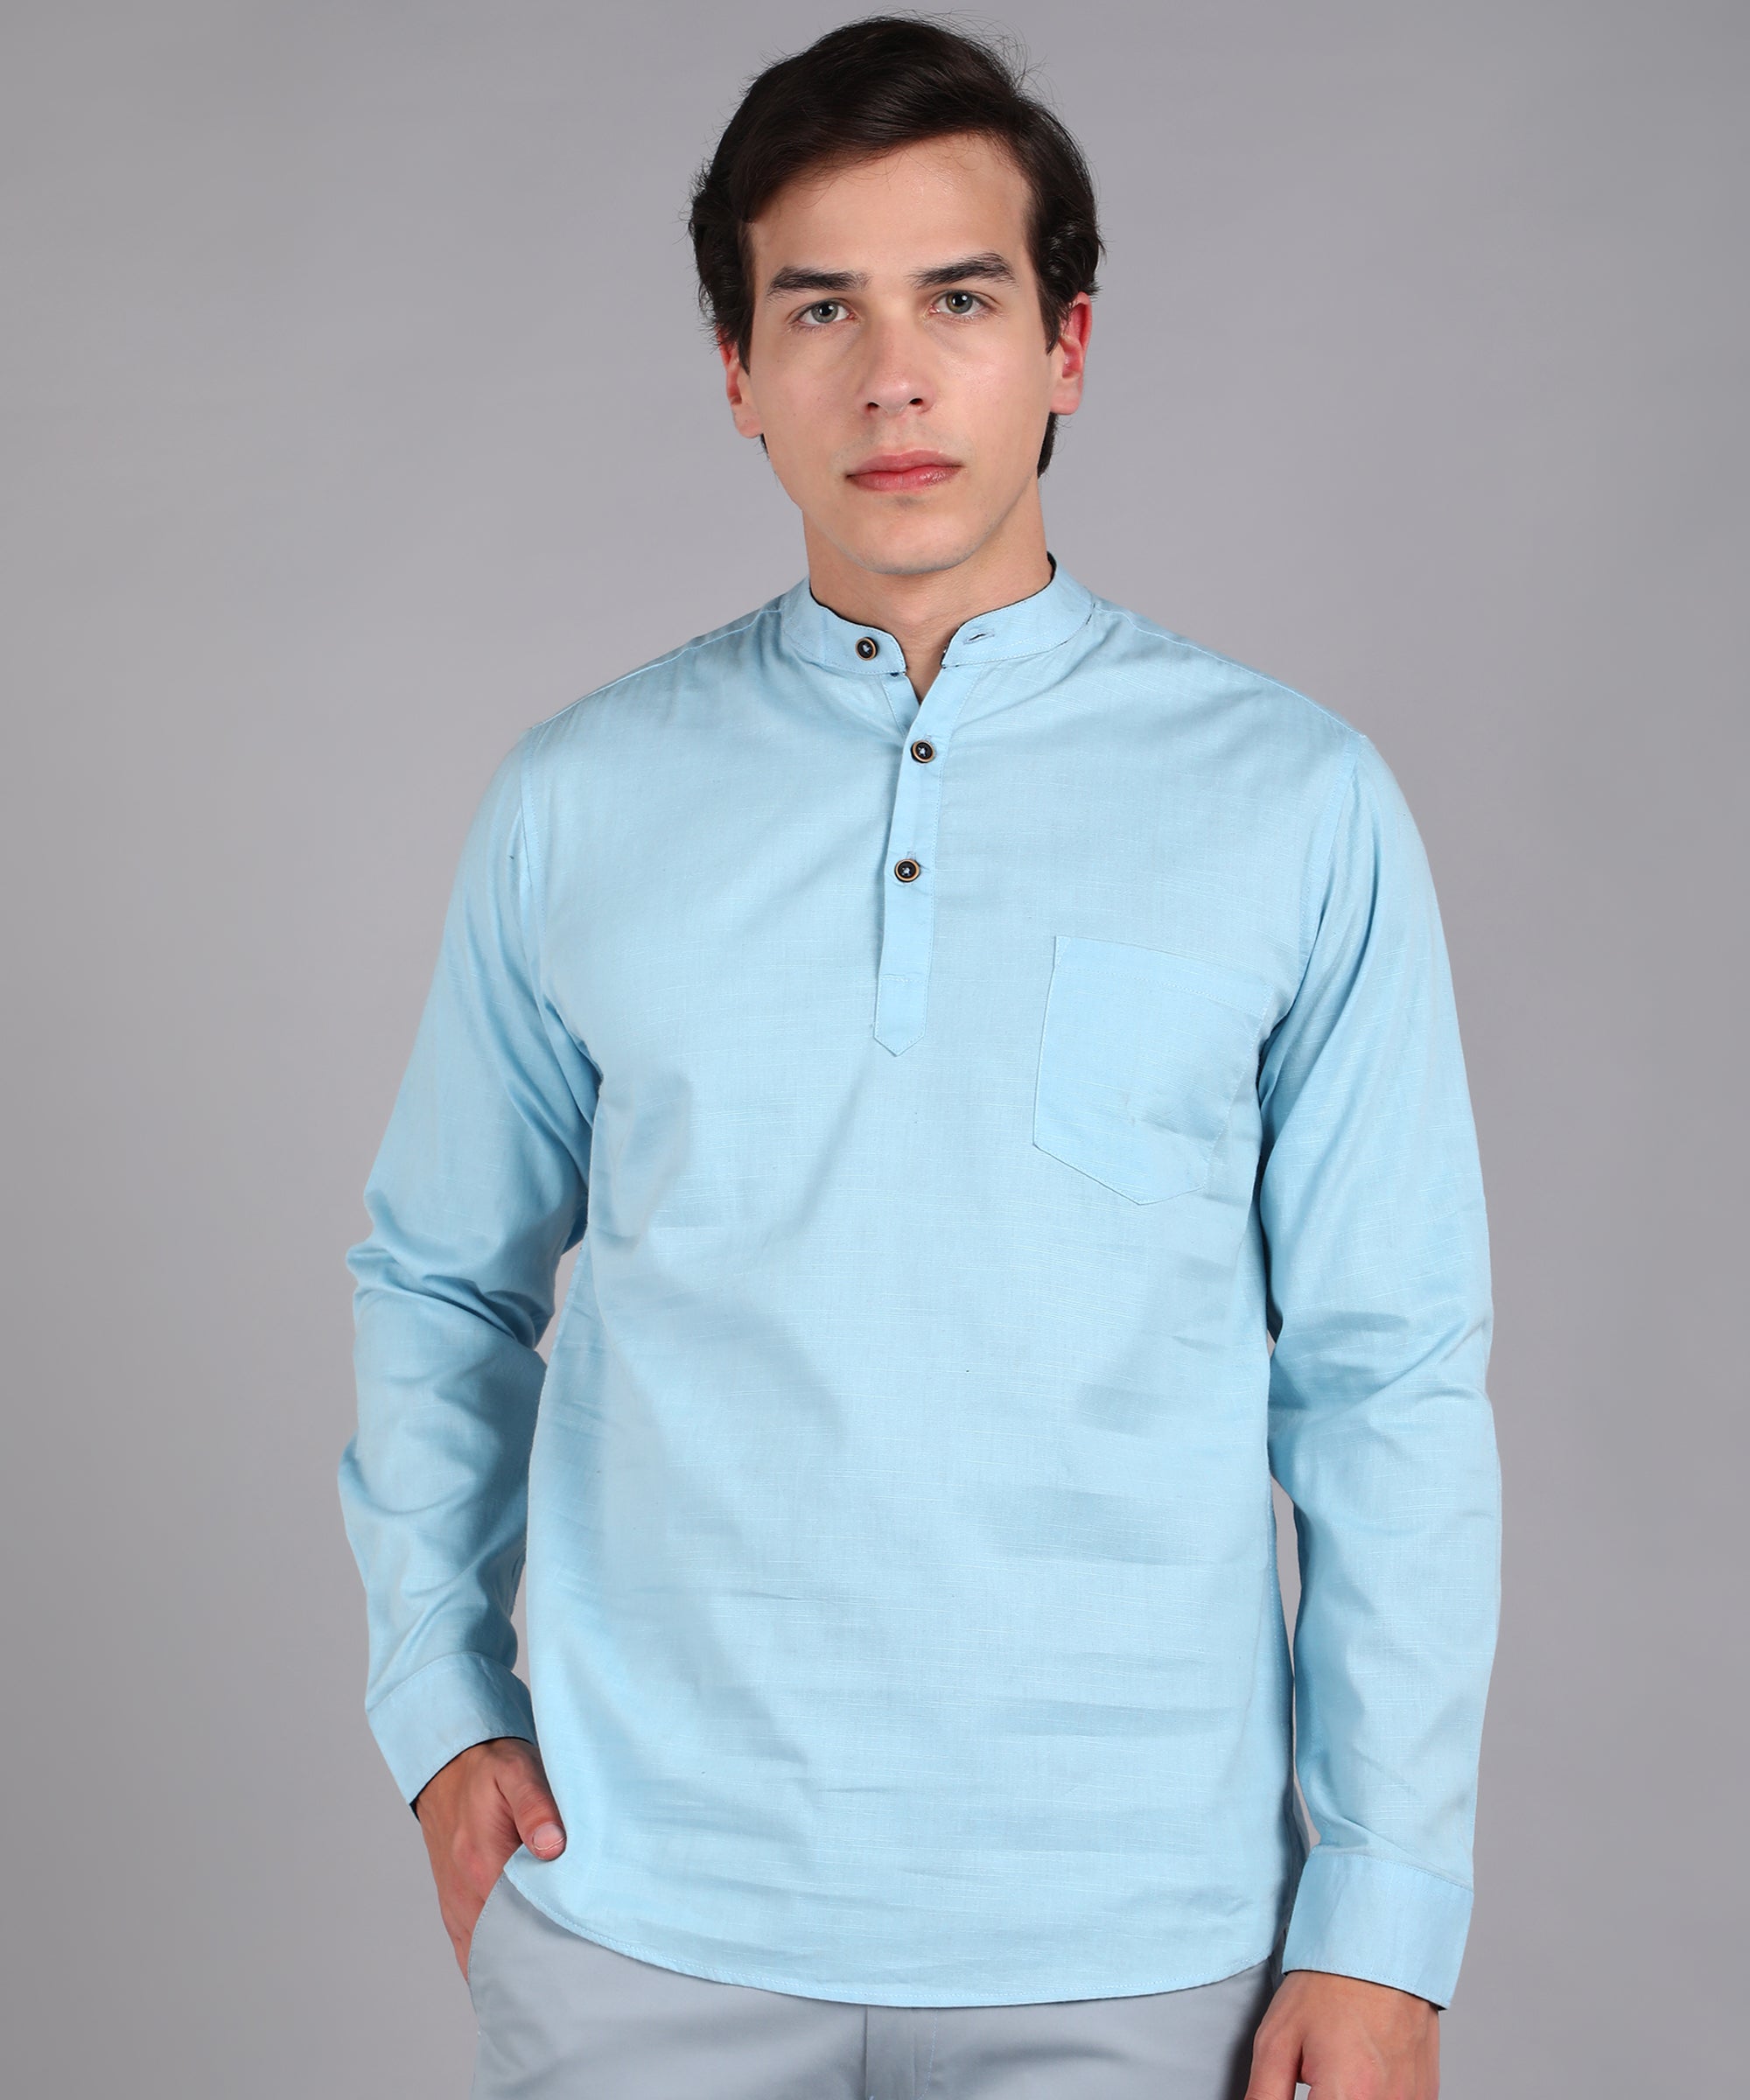 Men's Sky Blue Cotton Full Sleeve Slim Fit Solid Shirt with Mandarin Collar